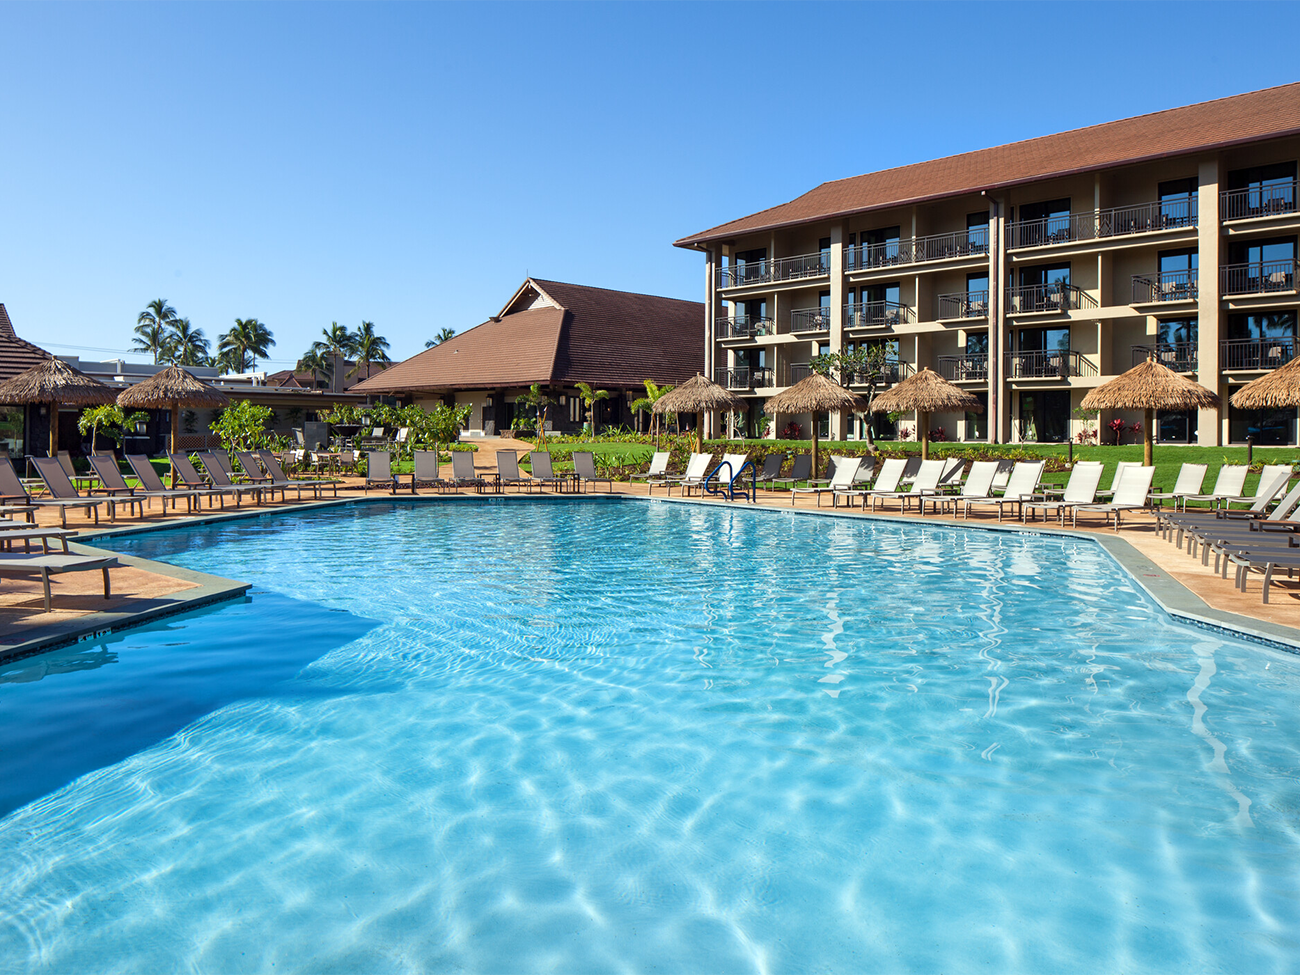 Image of Sheraton Kaua‘i Resort Villas in Koloa, Kaua‘i.